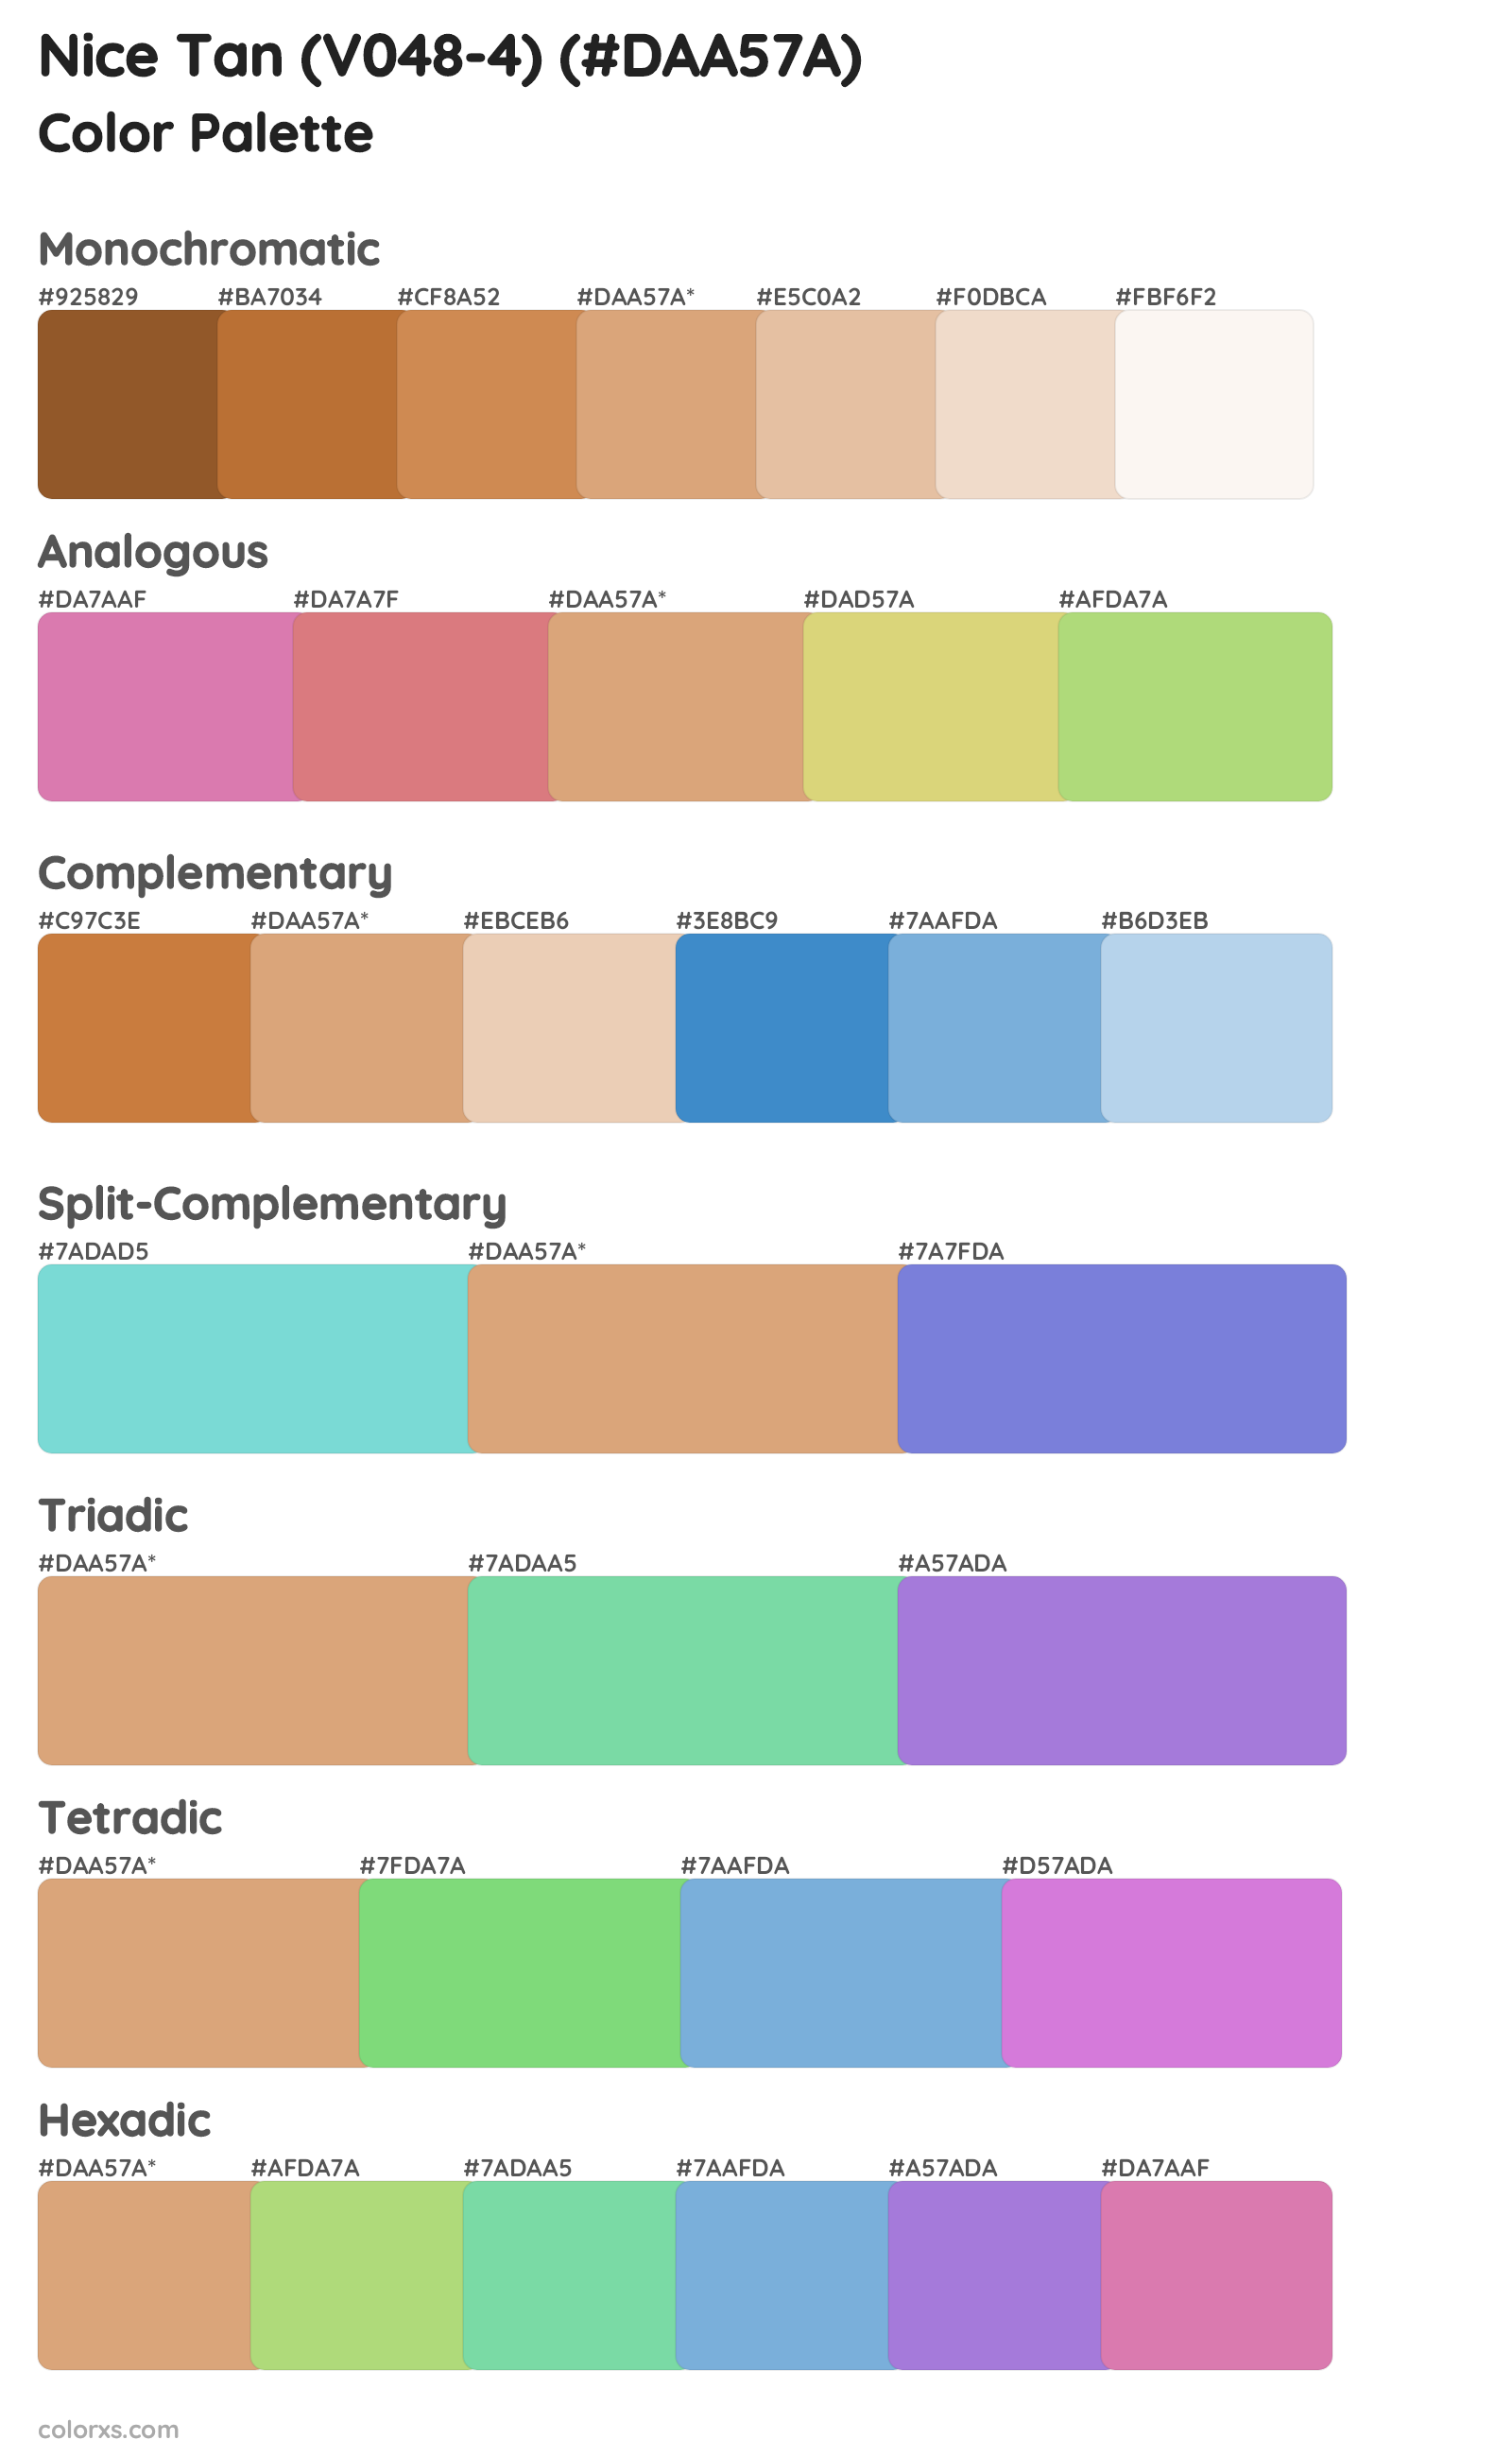 Nice Tan (V048-4) Color Scheme Palettes